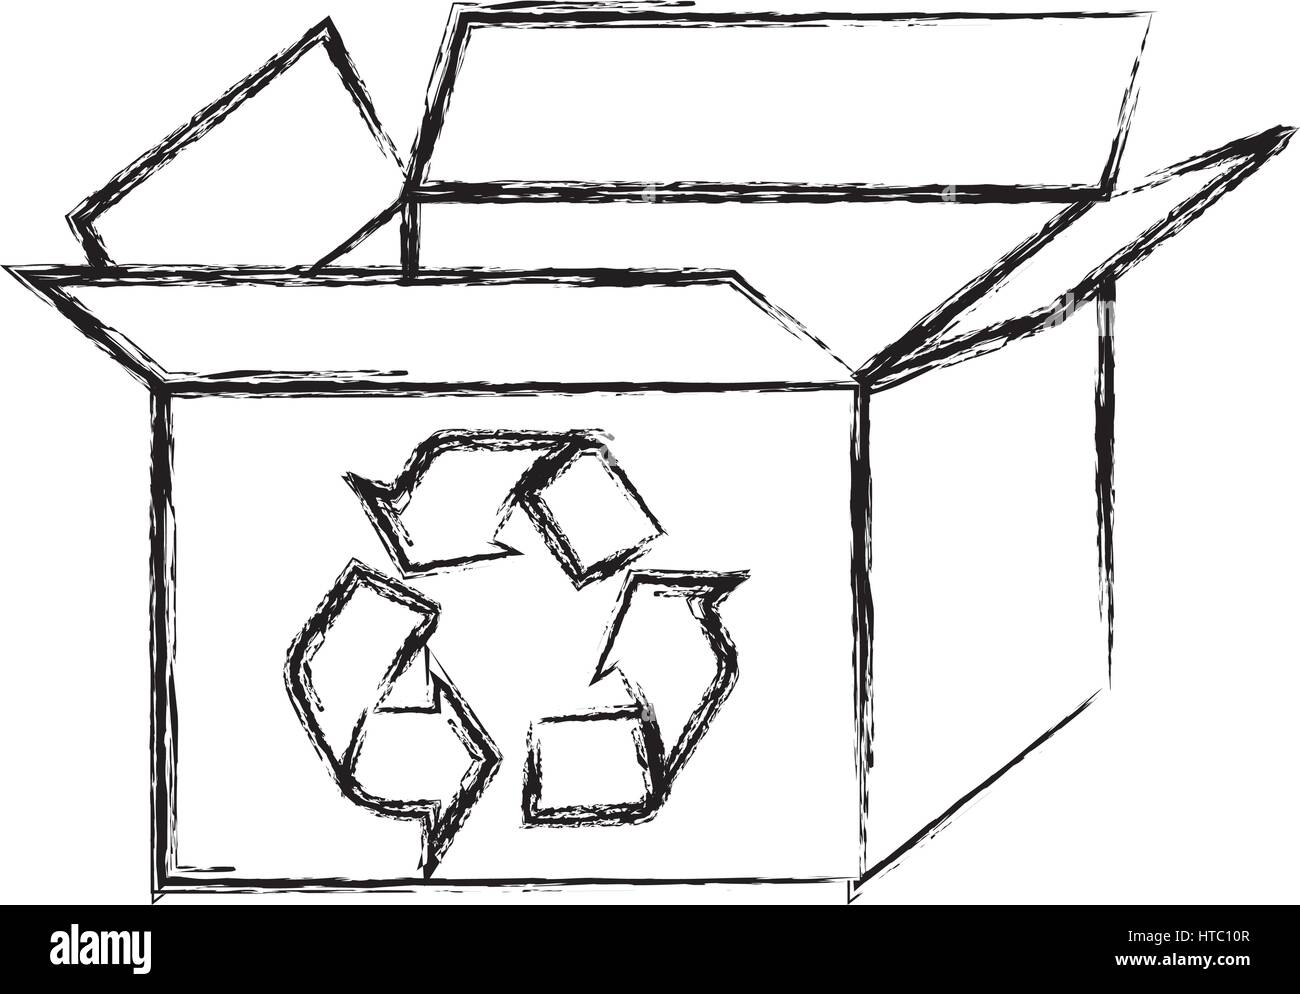 verschwommene Silhouette Karton mit recycling-symbol Stock-Vektorgrafik -  Alamy